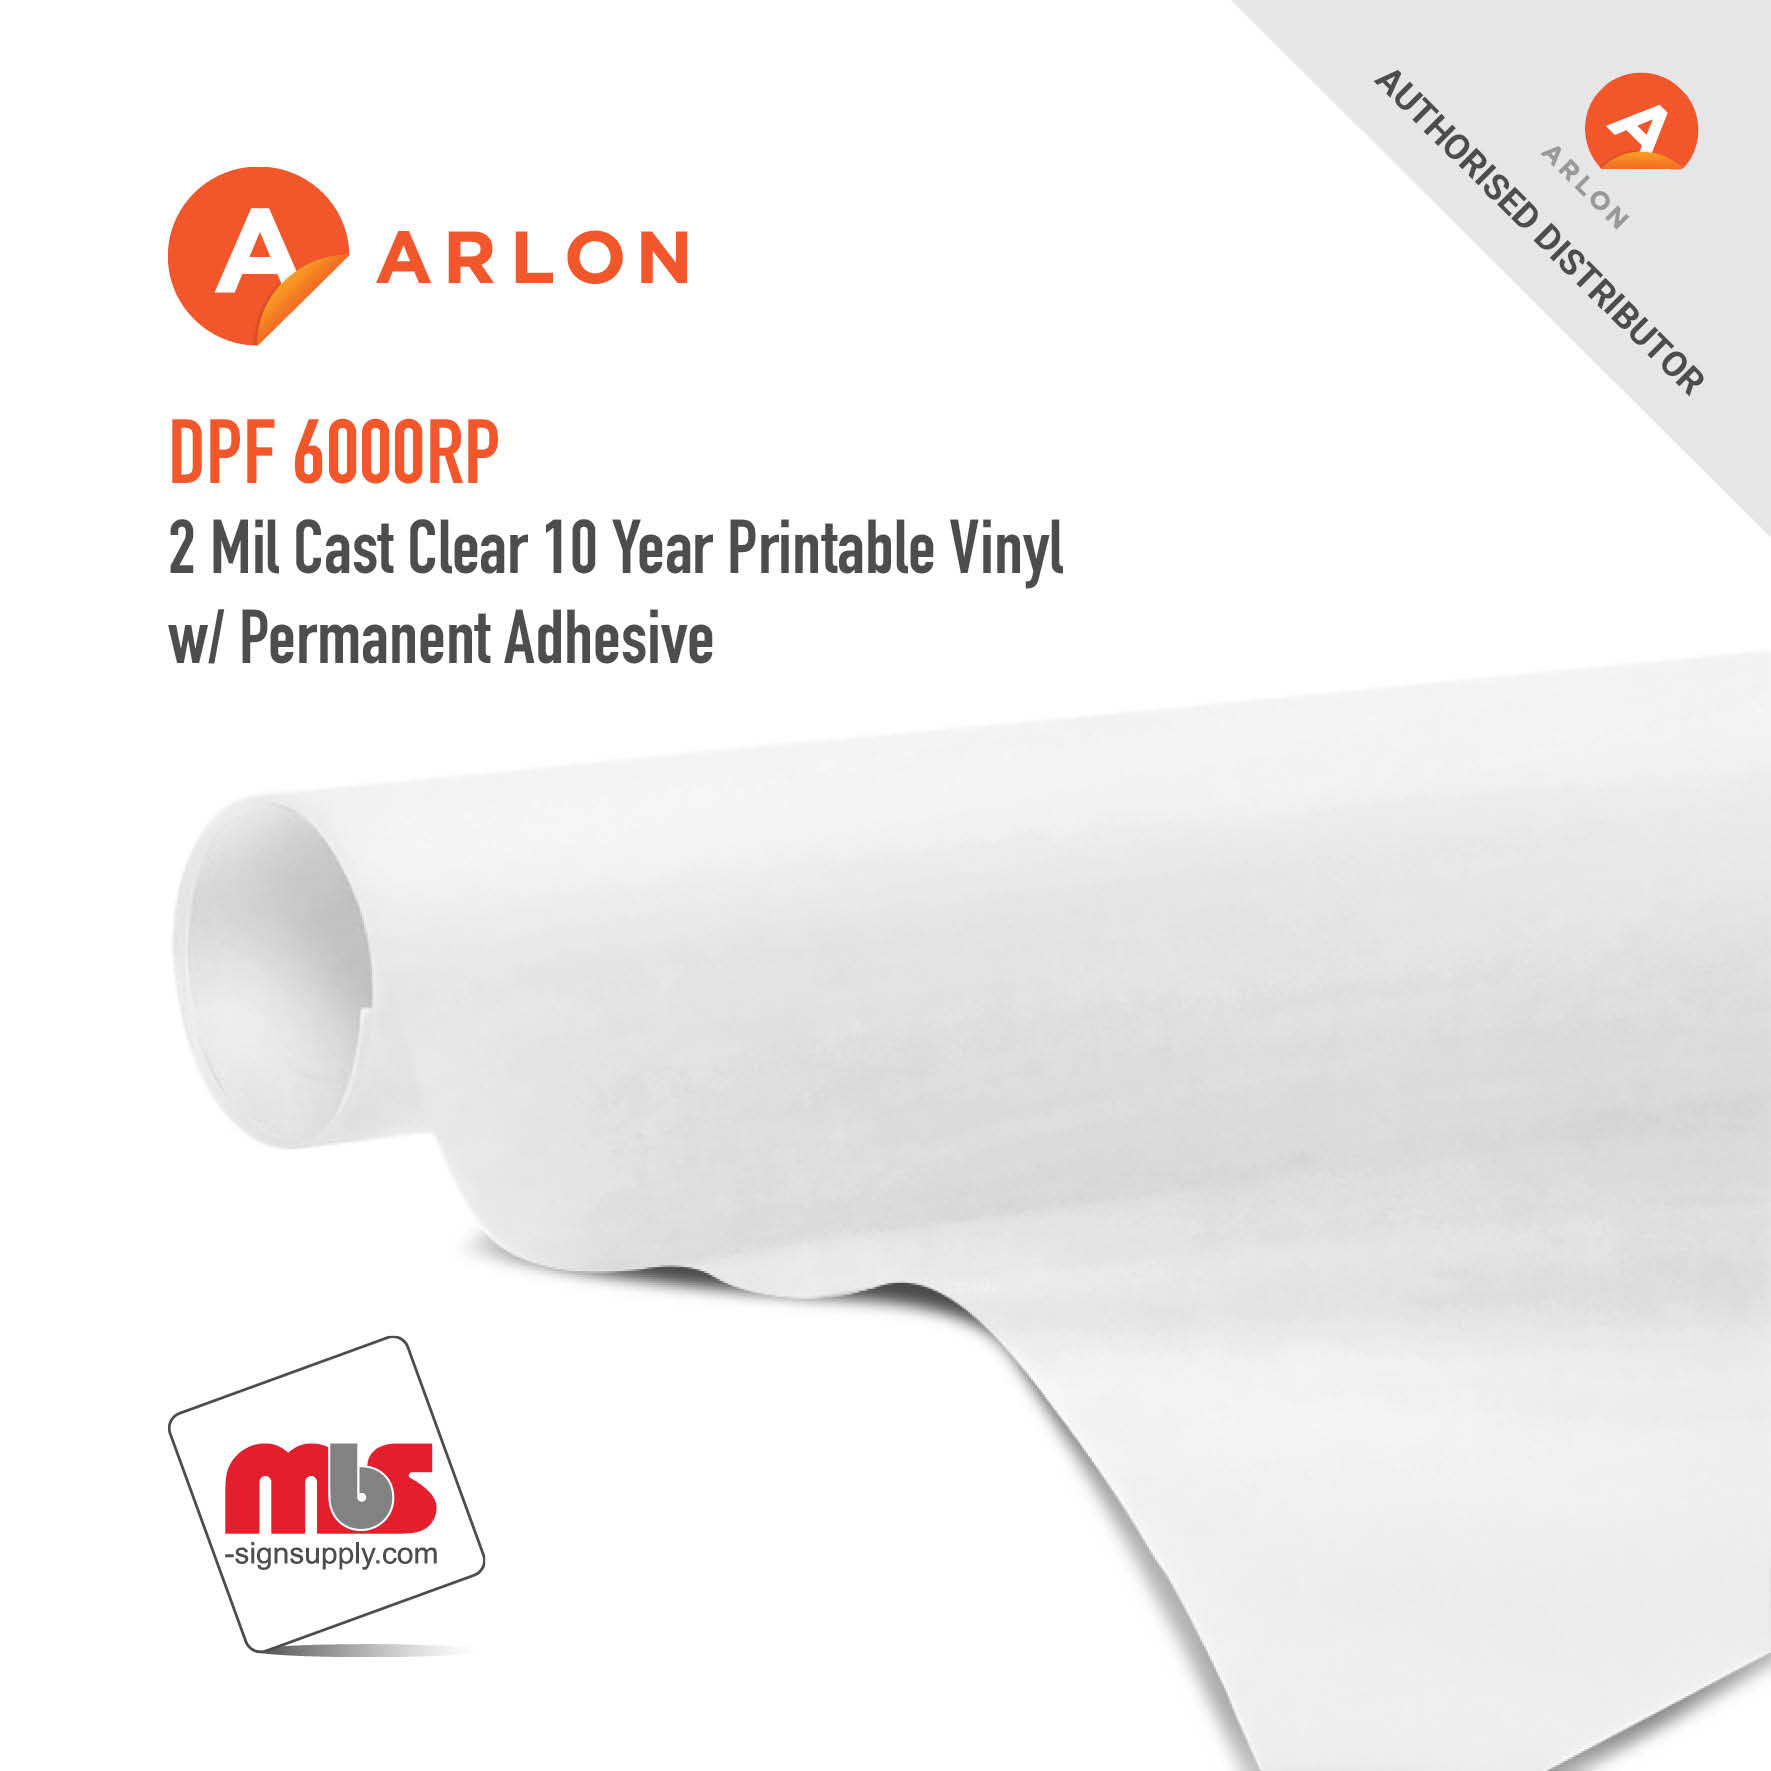 60'' x 50 Yard Roll - Arlon DPF 6000RP 2 Mil Cast Clear 10 Year Printable Vinyl w/ Permanent Adhesive